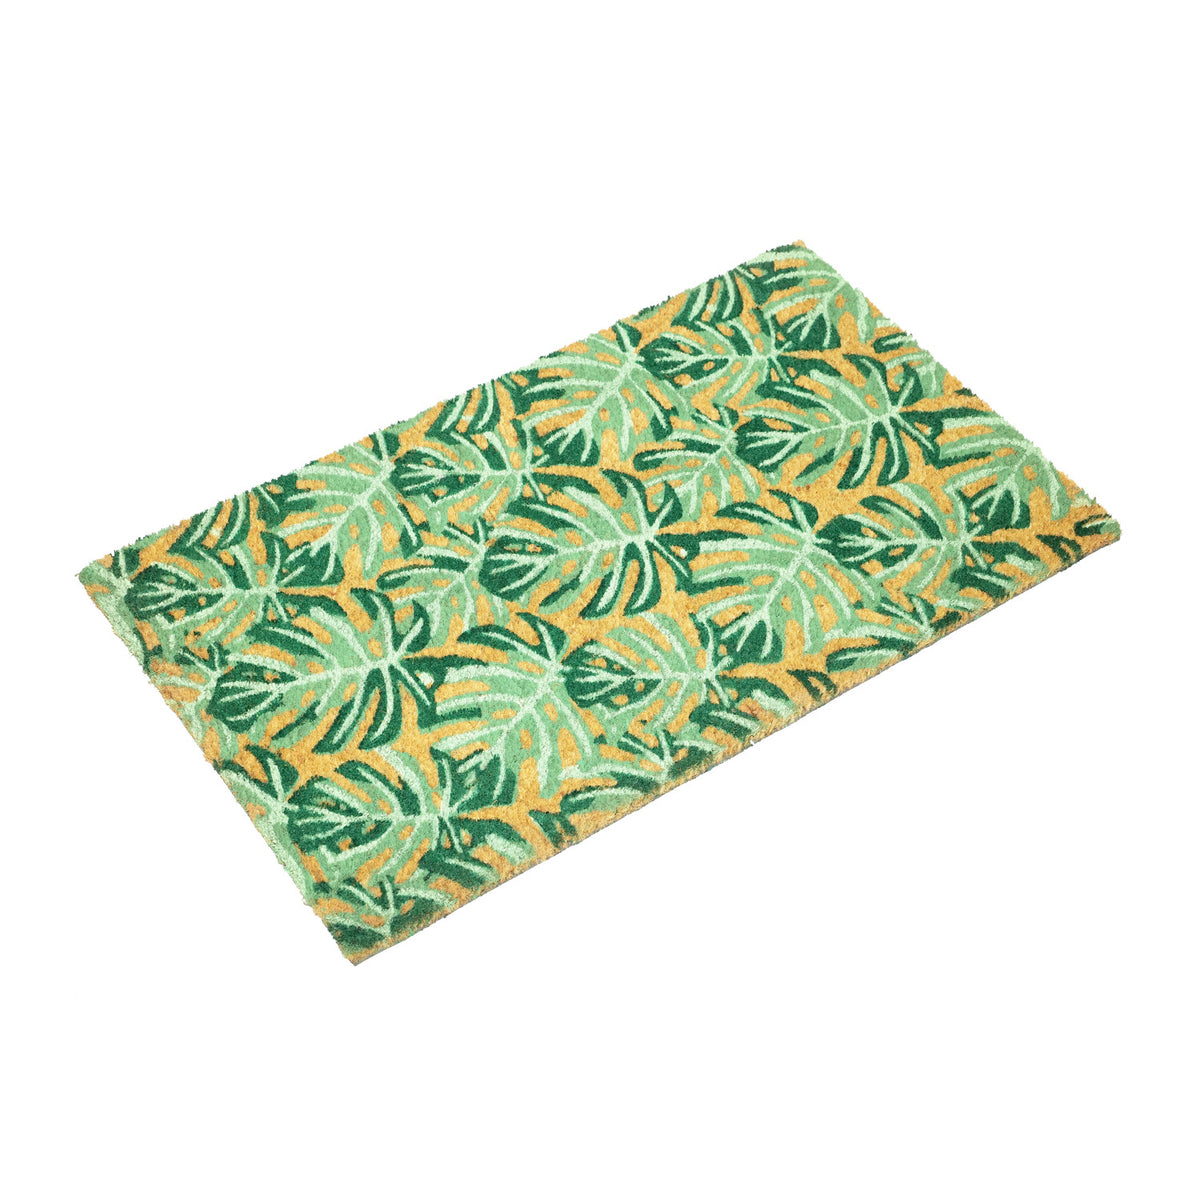 Fern Leaves Green Design Natural Printed Coir Floor Mat